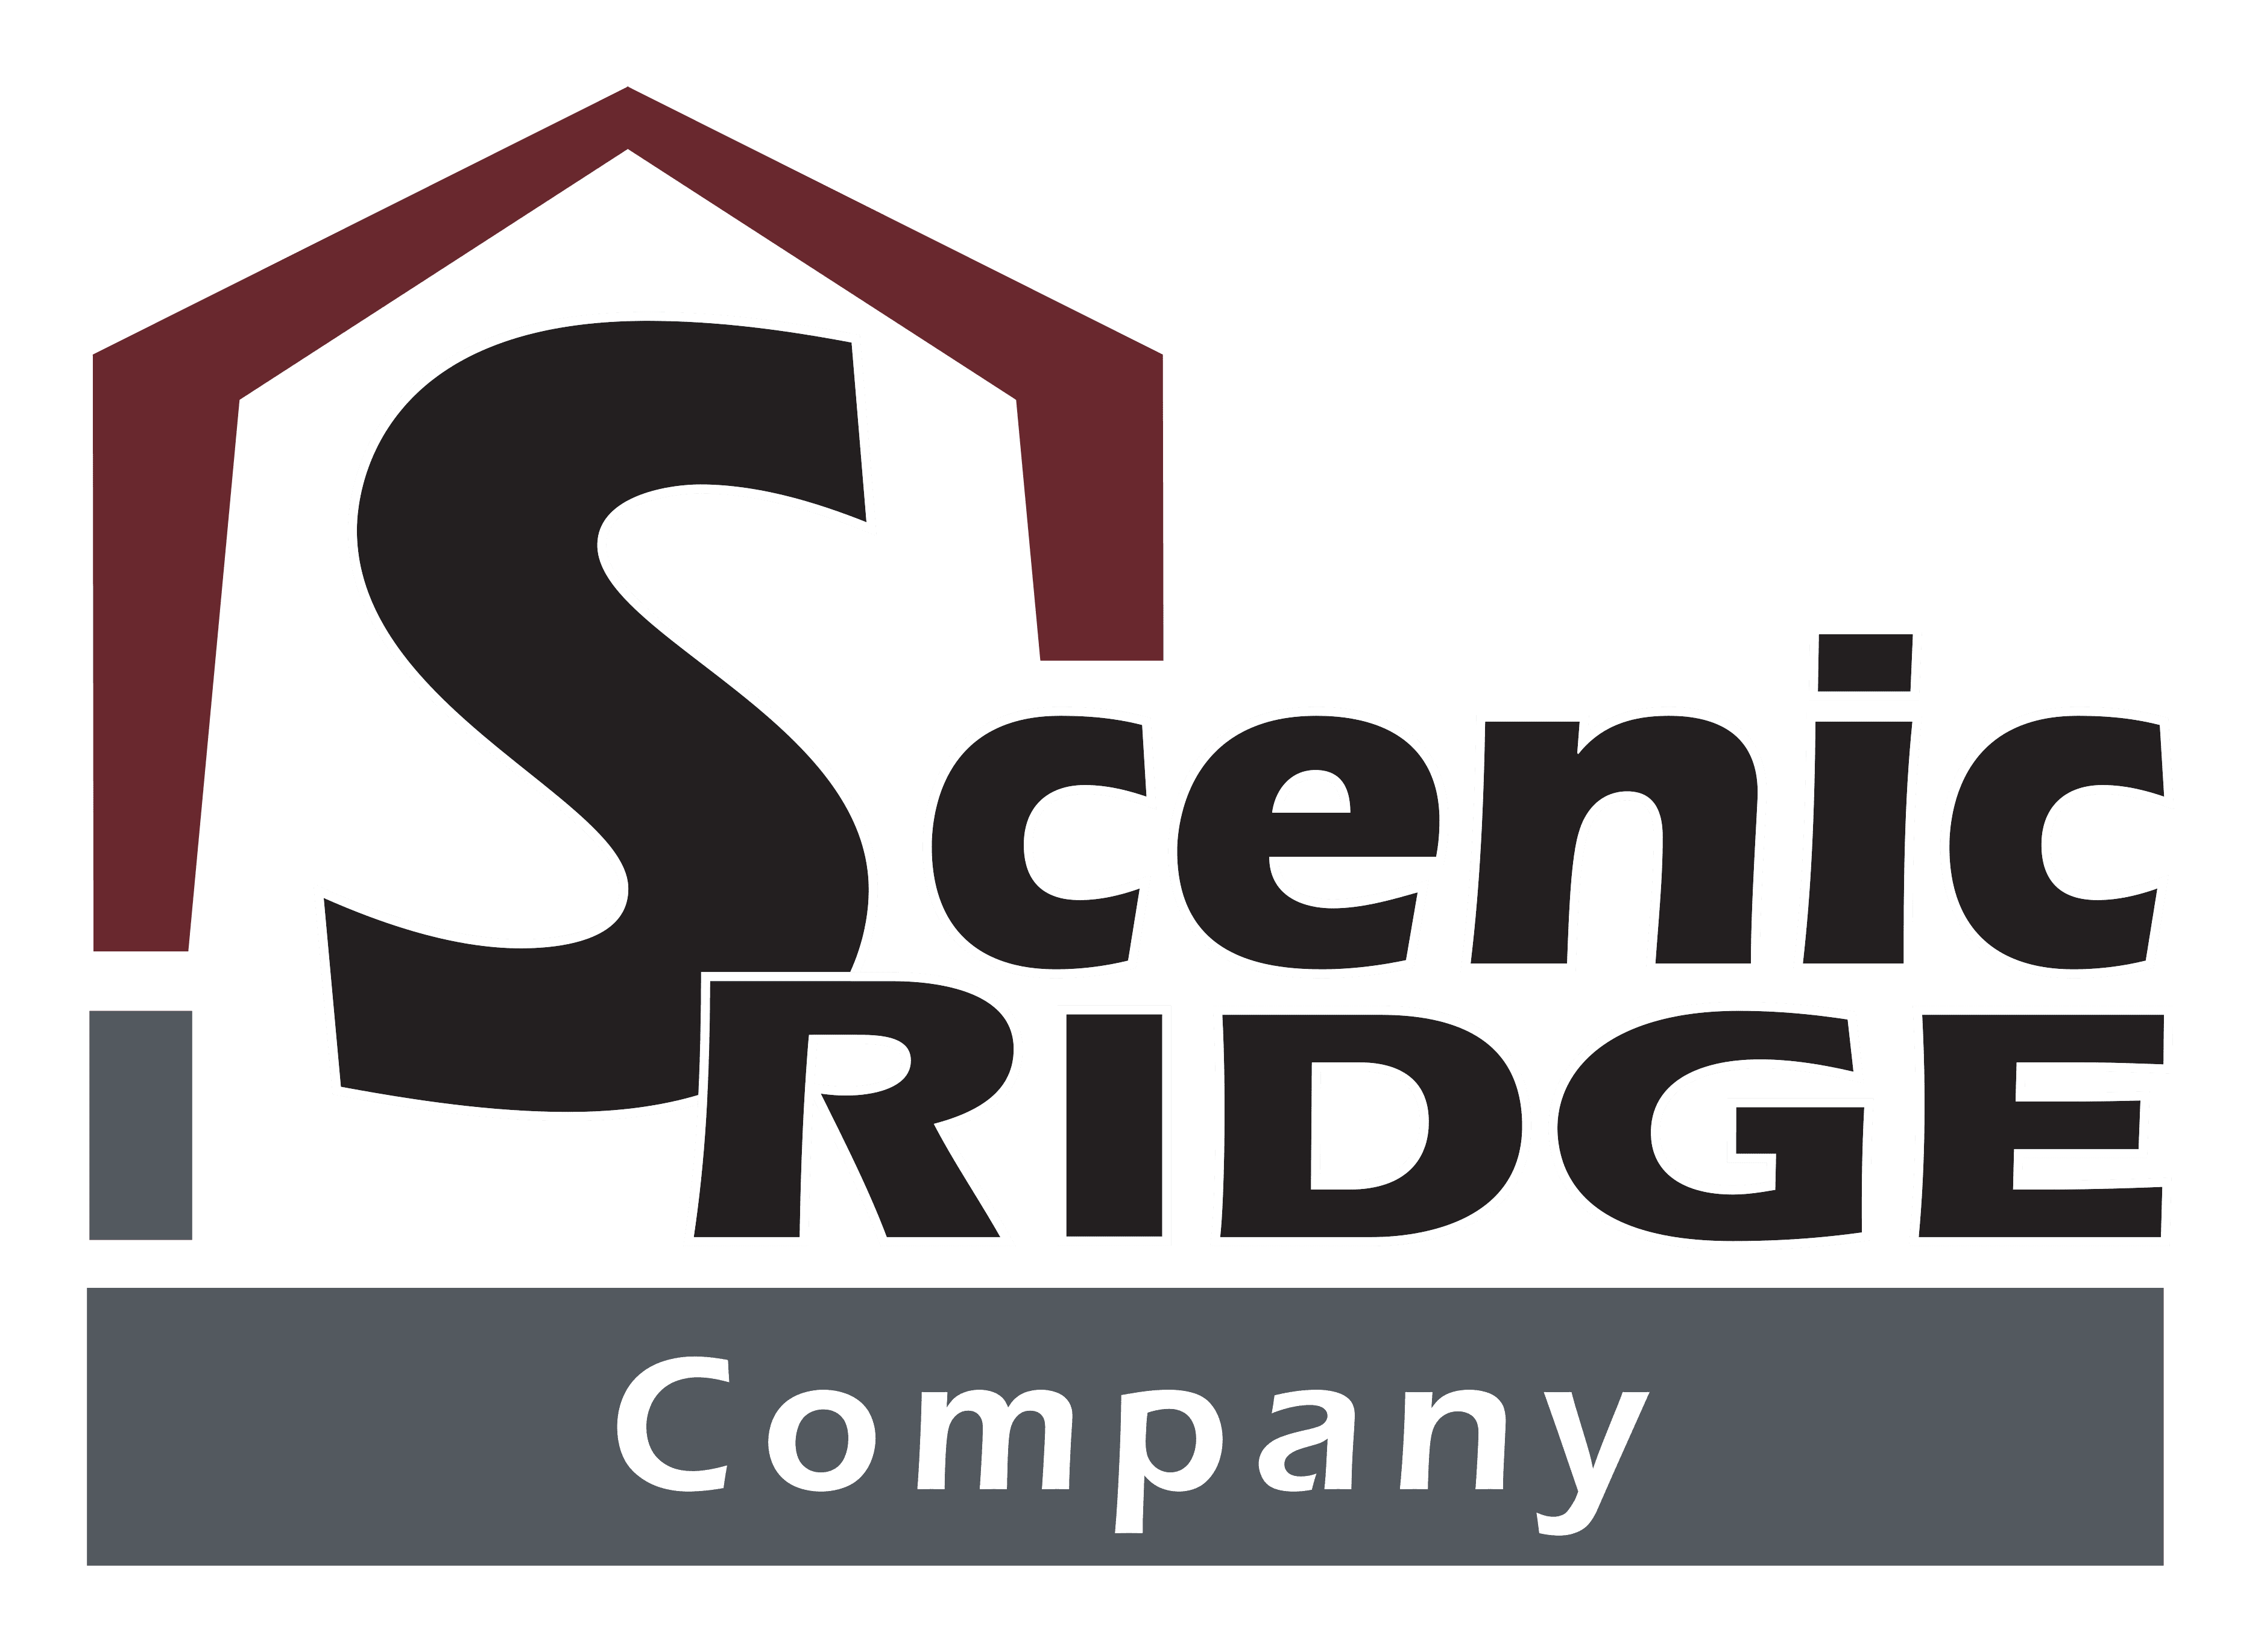 Scenic Ridge Company